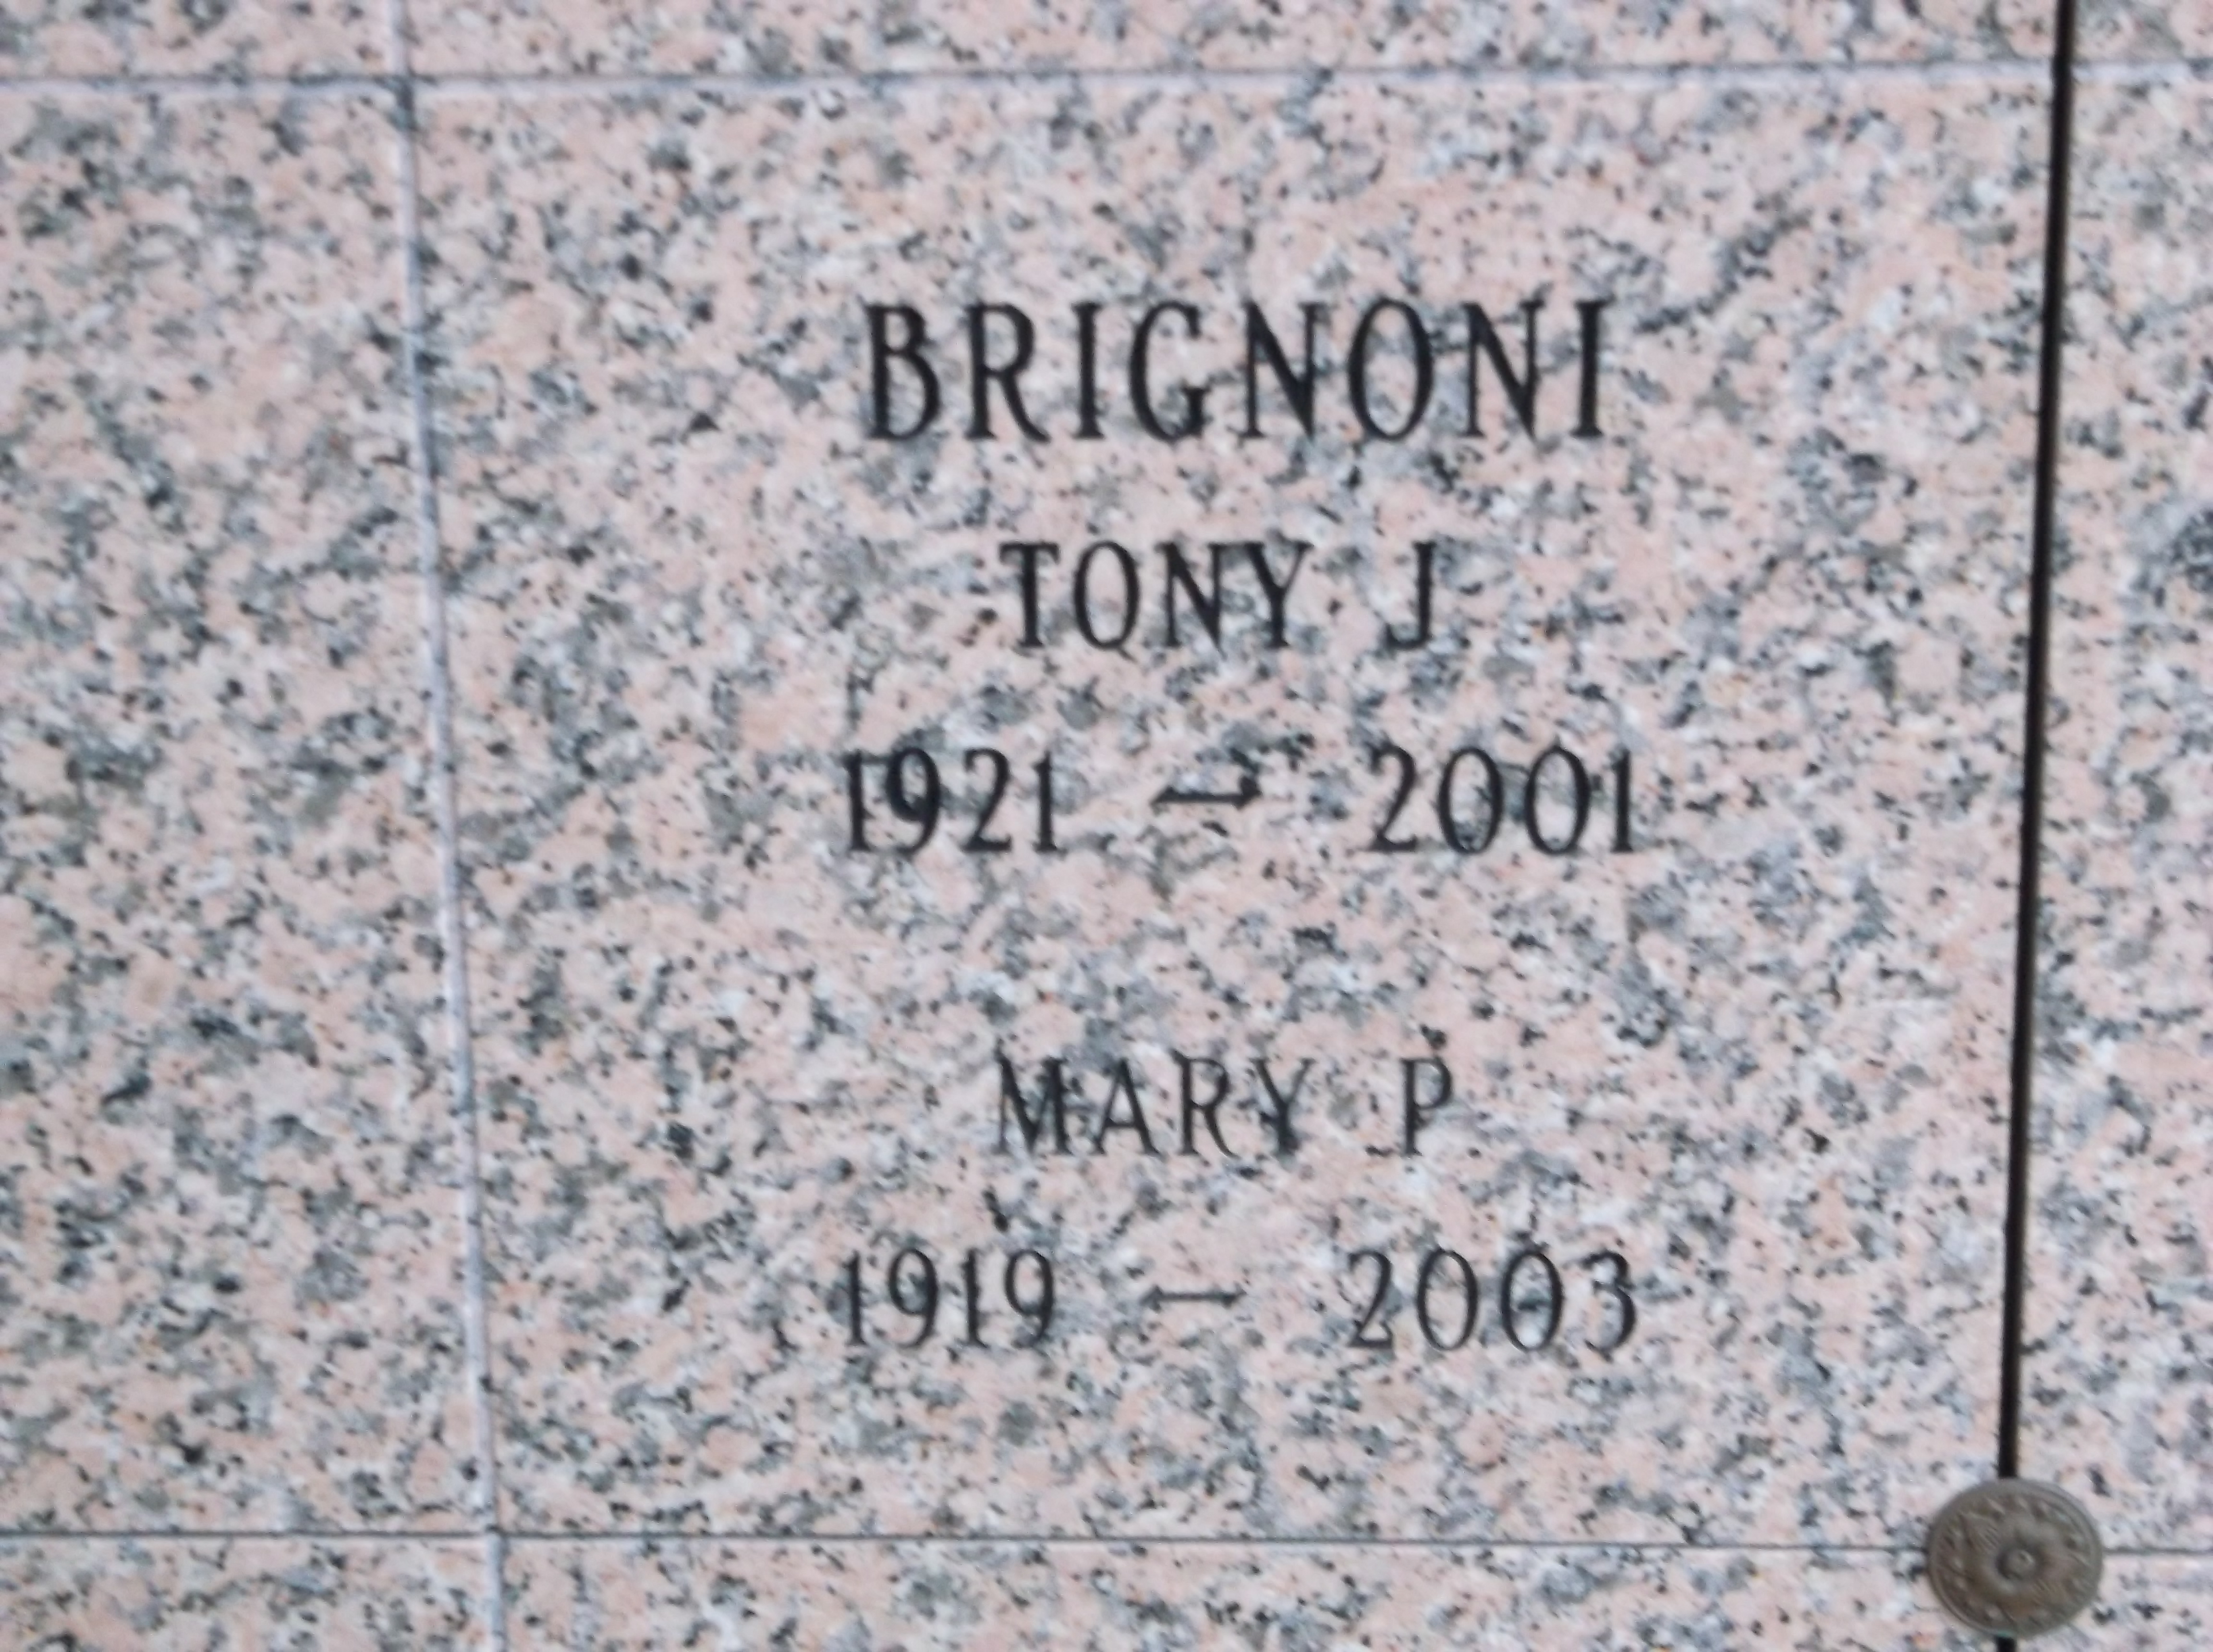 Tony J Brignoni